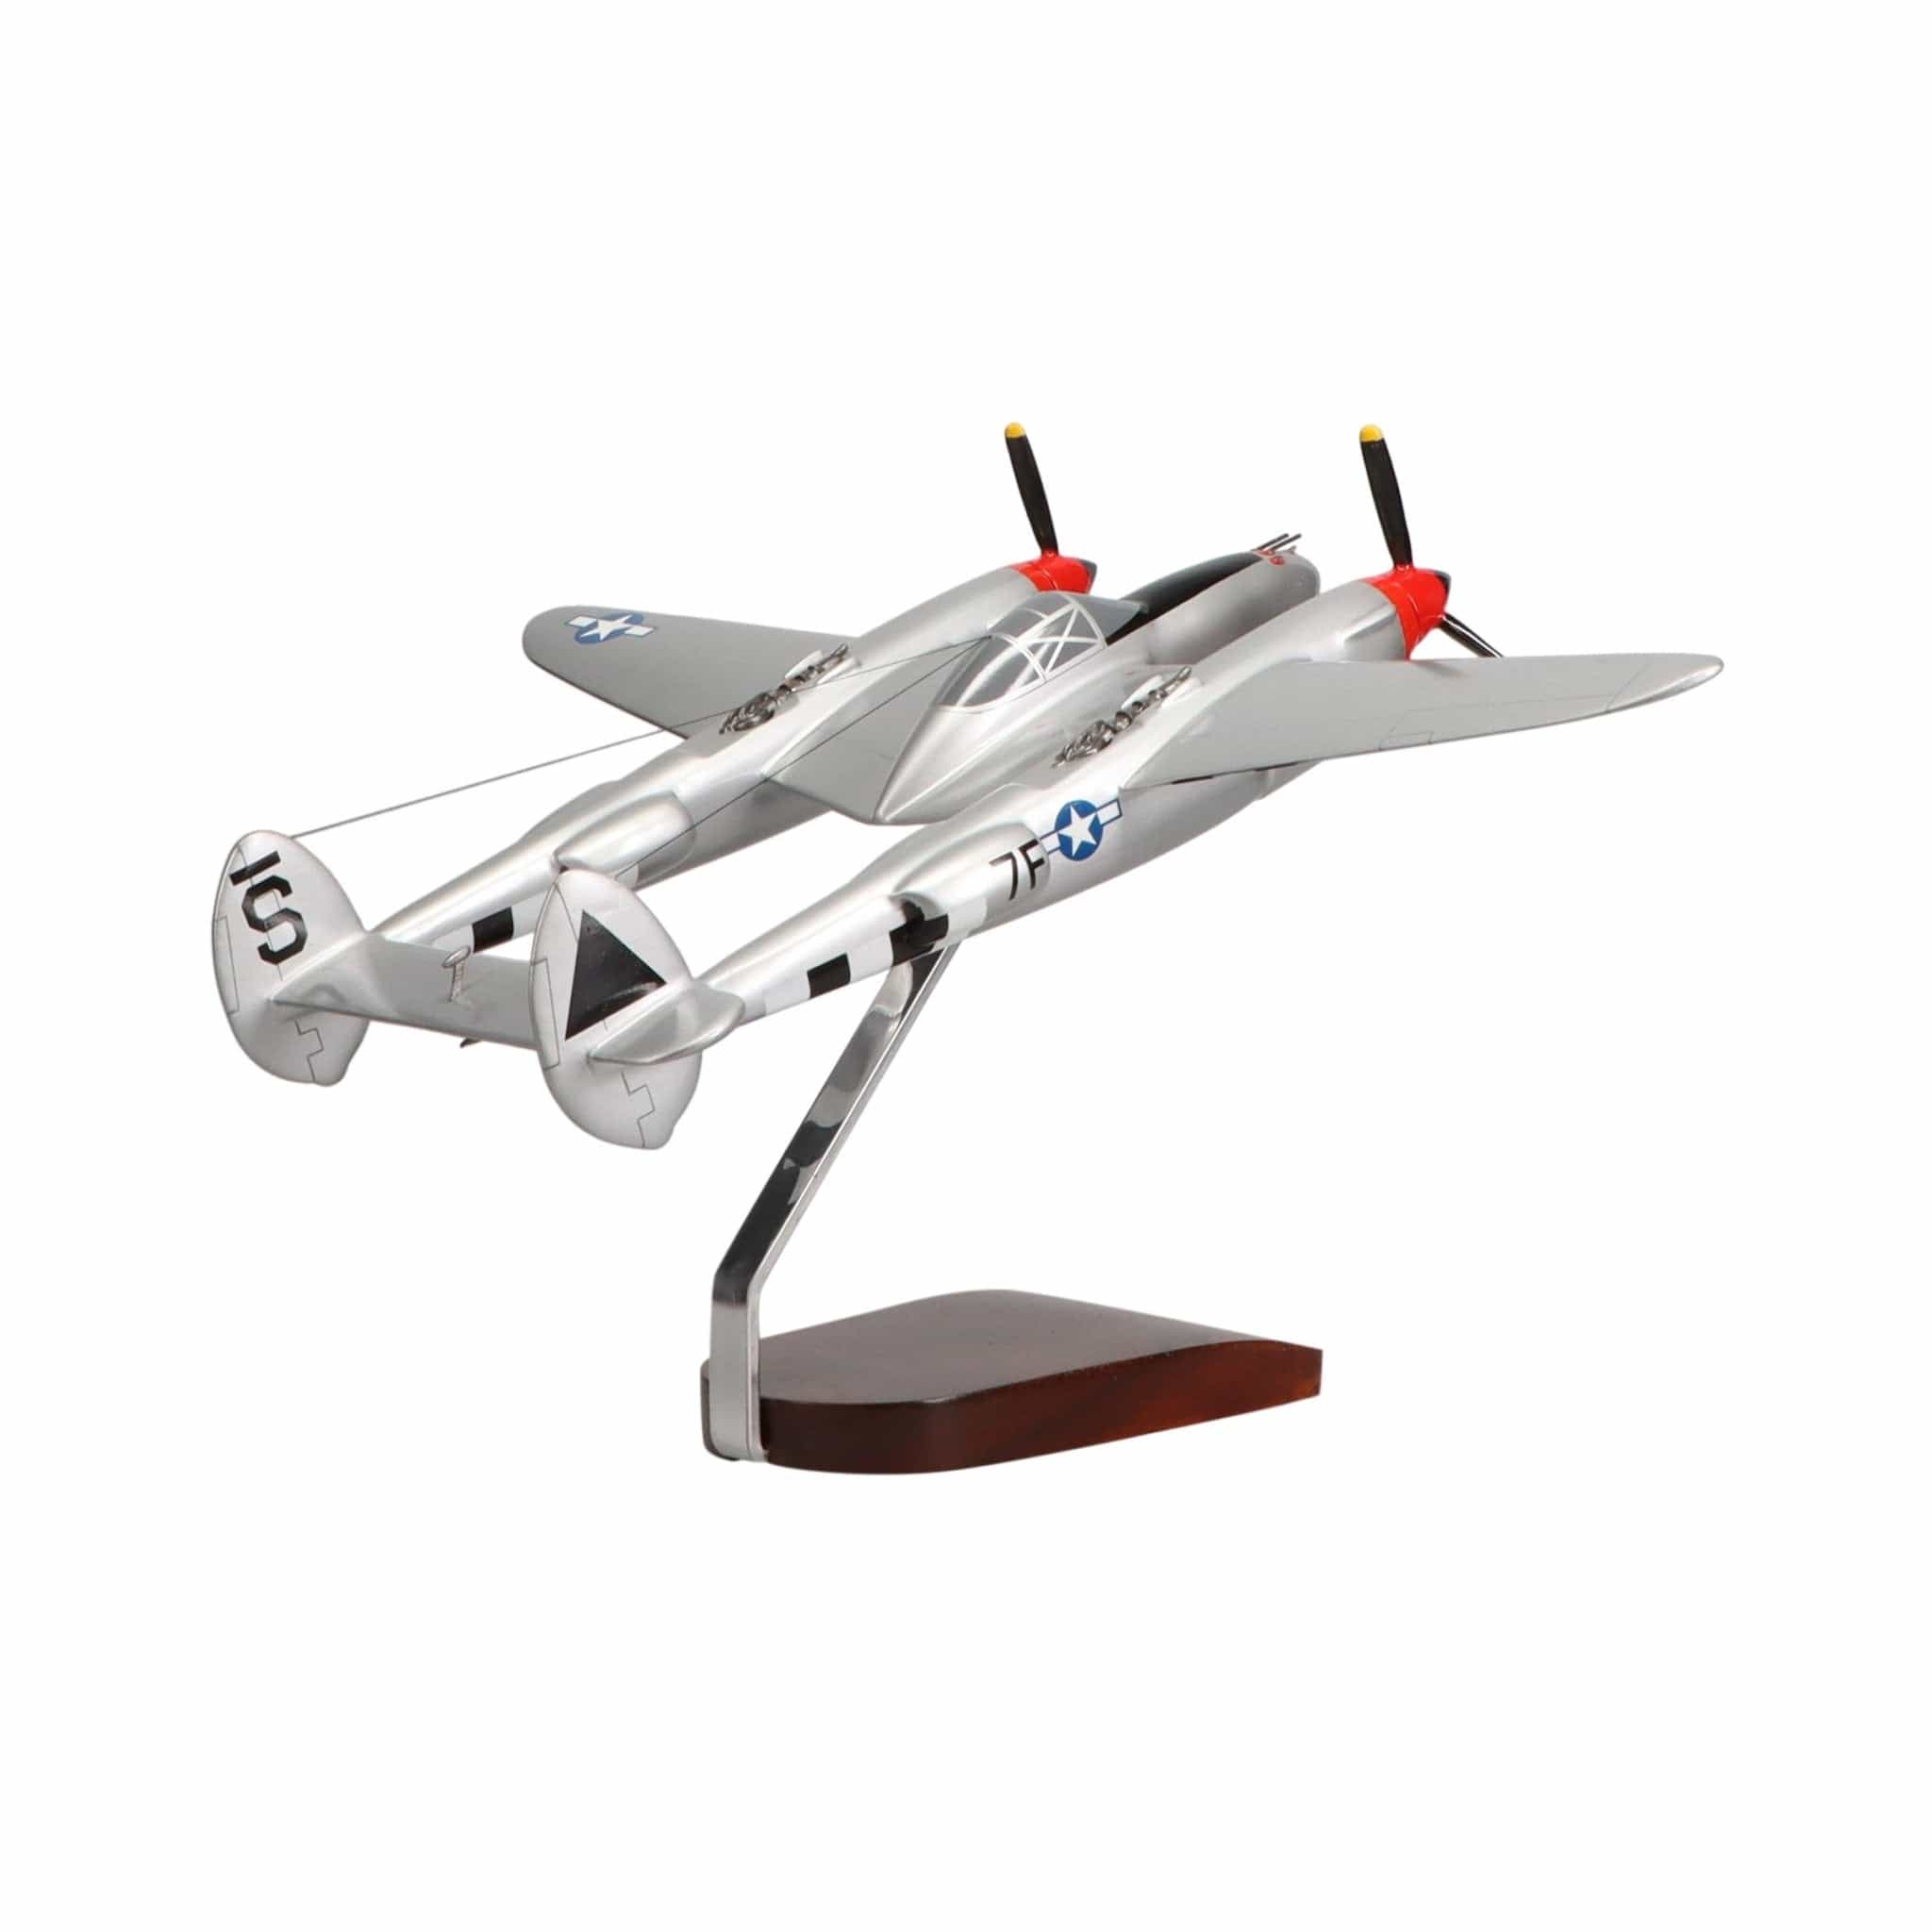 Lockheed P-38 Lightning® (Silver) Limited Edition Large Mahogany Model - PilotMall.com